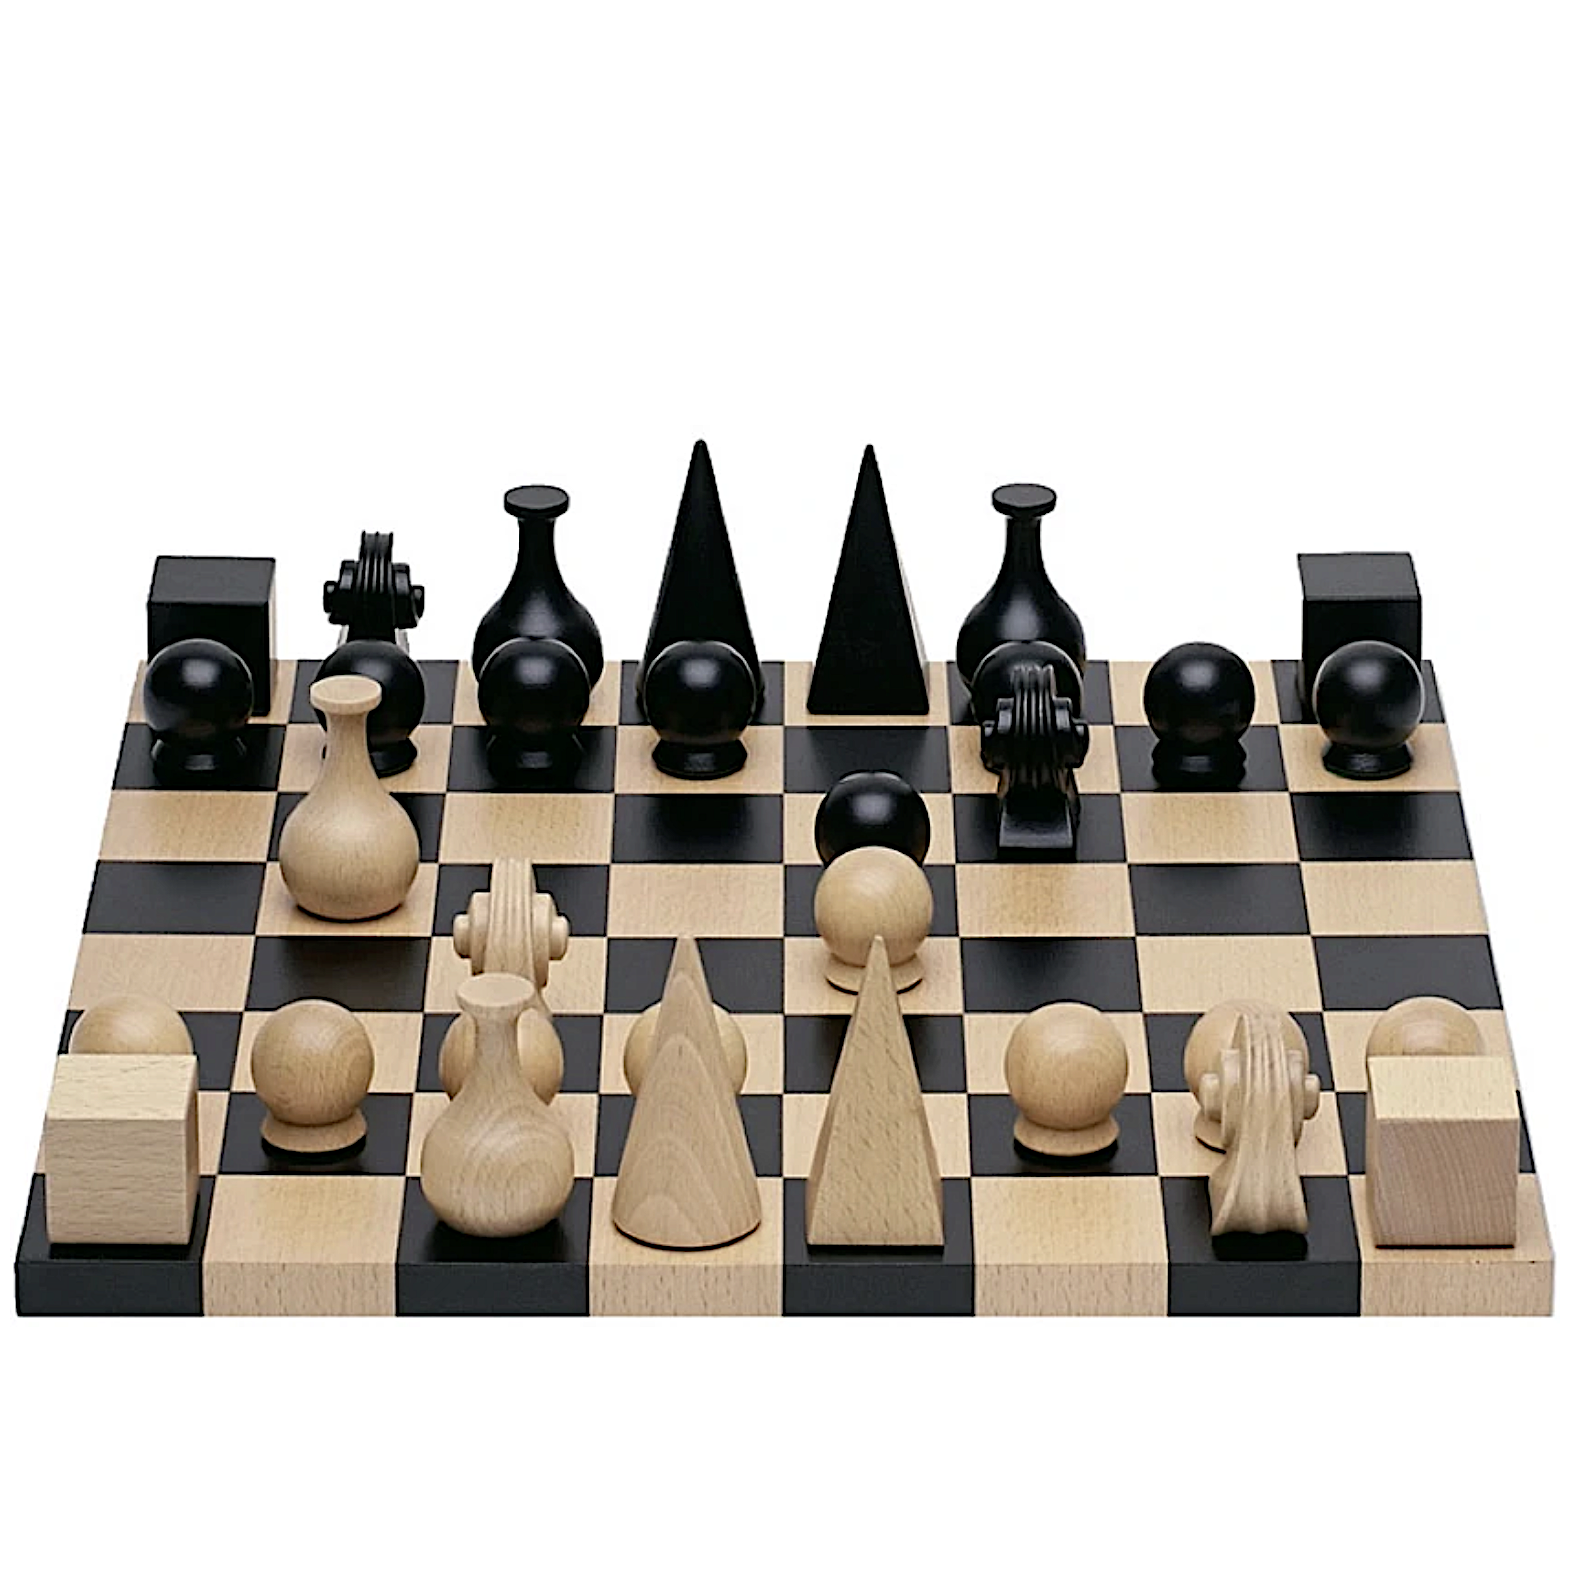 Man Ray chess Set